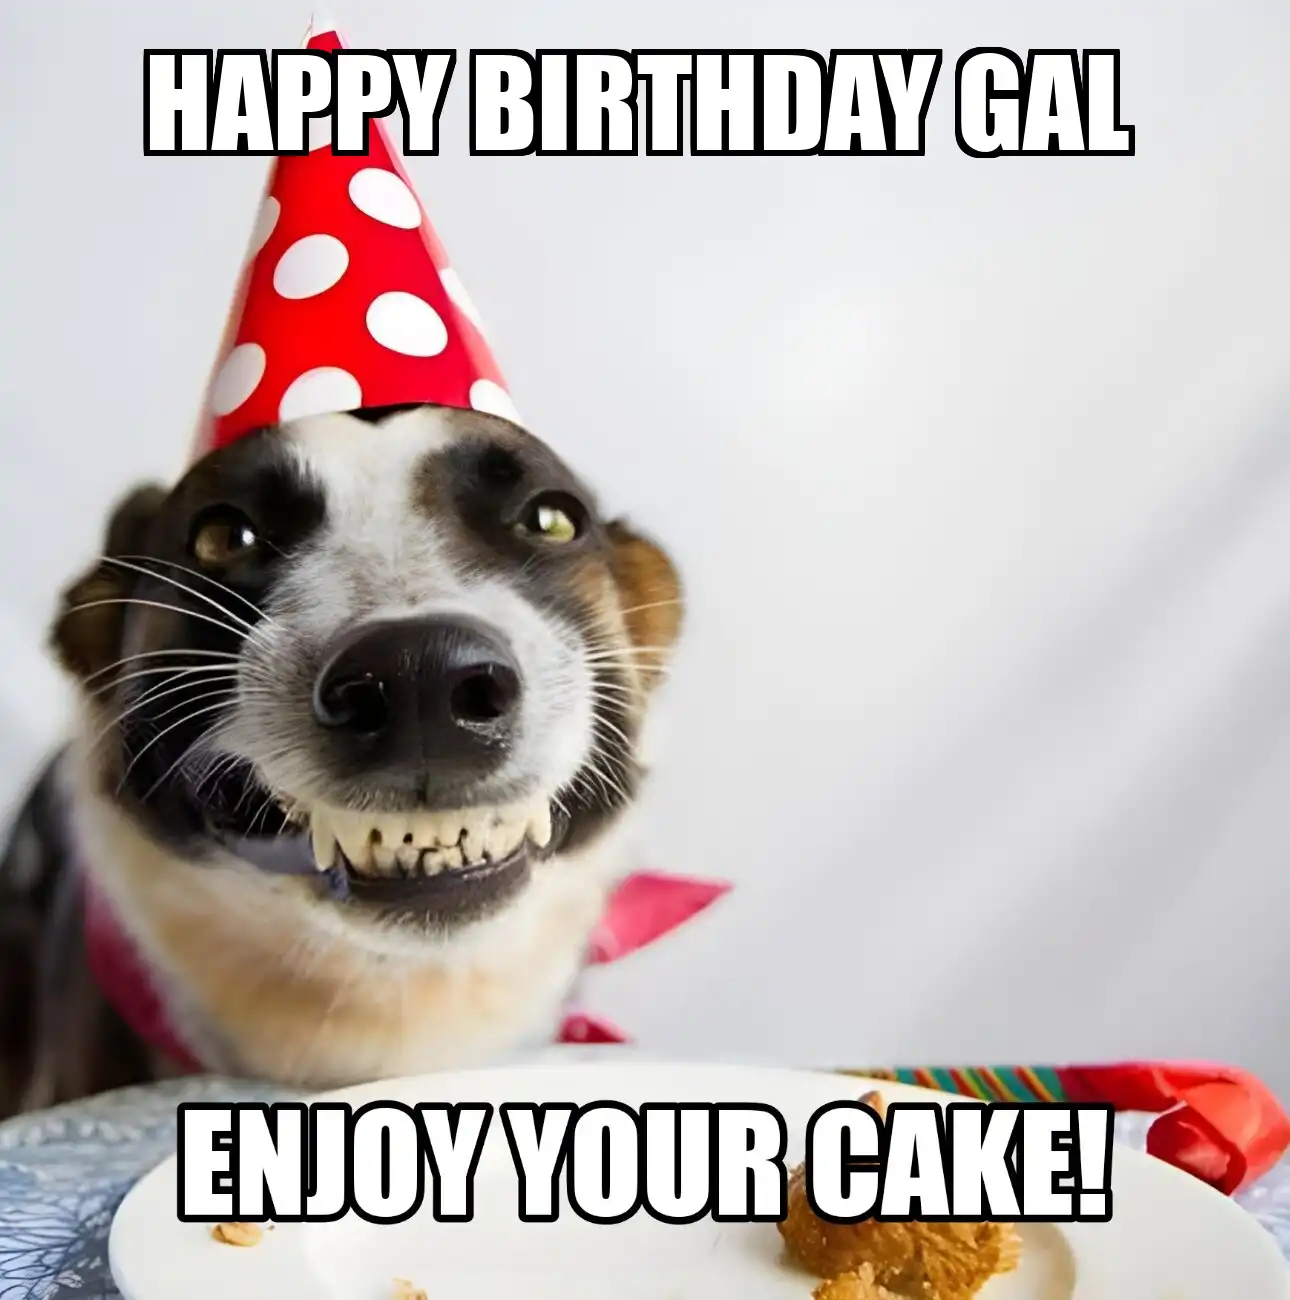 Happy Birthday Gal Enjoy Your Cake Dog Meme